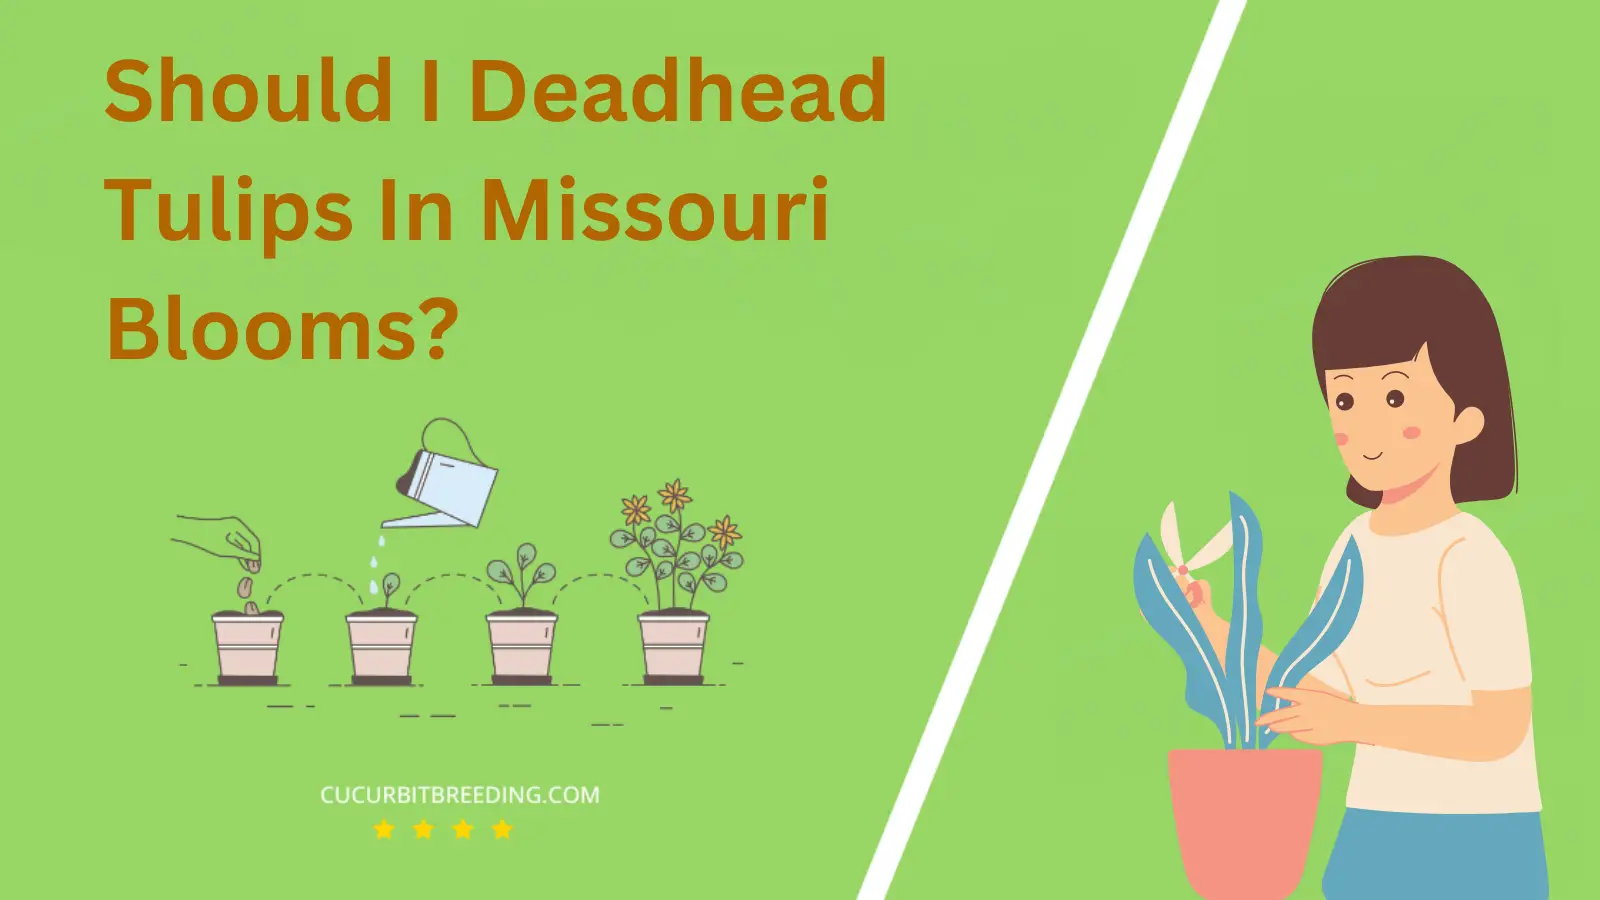 Should I Deadhead Tulips In Missouri Blooms?